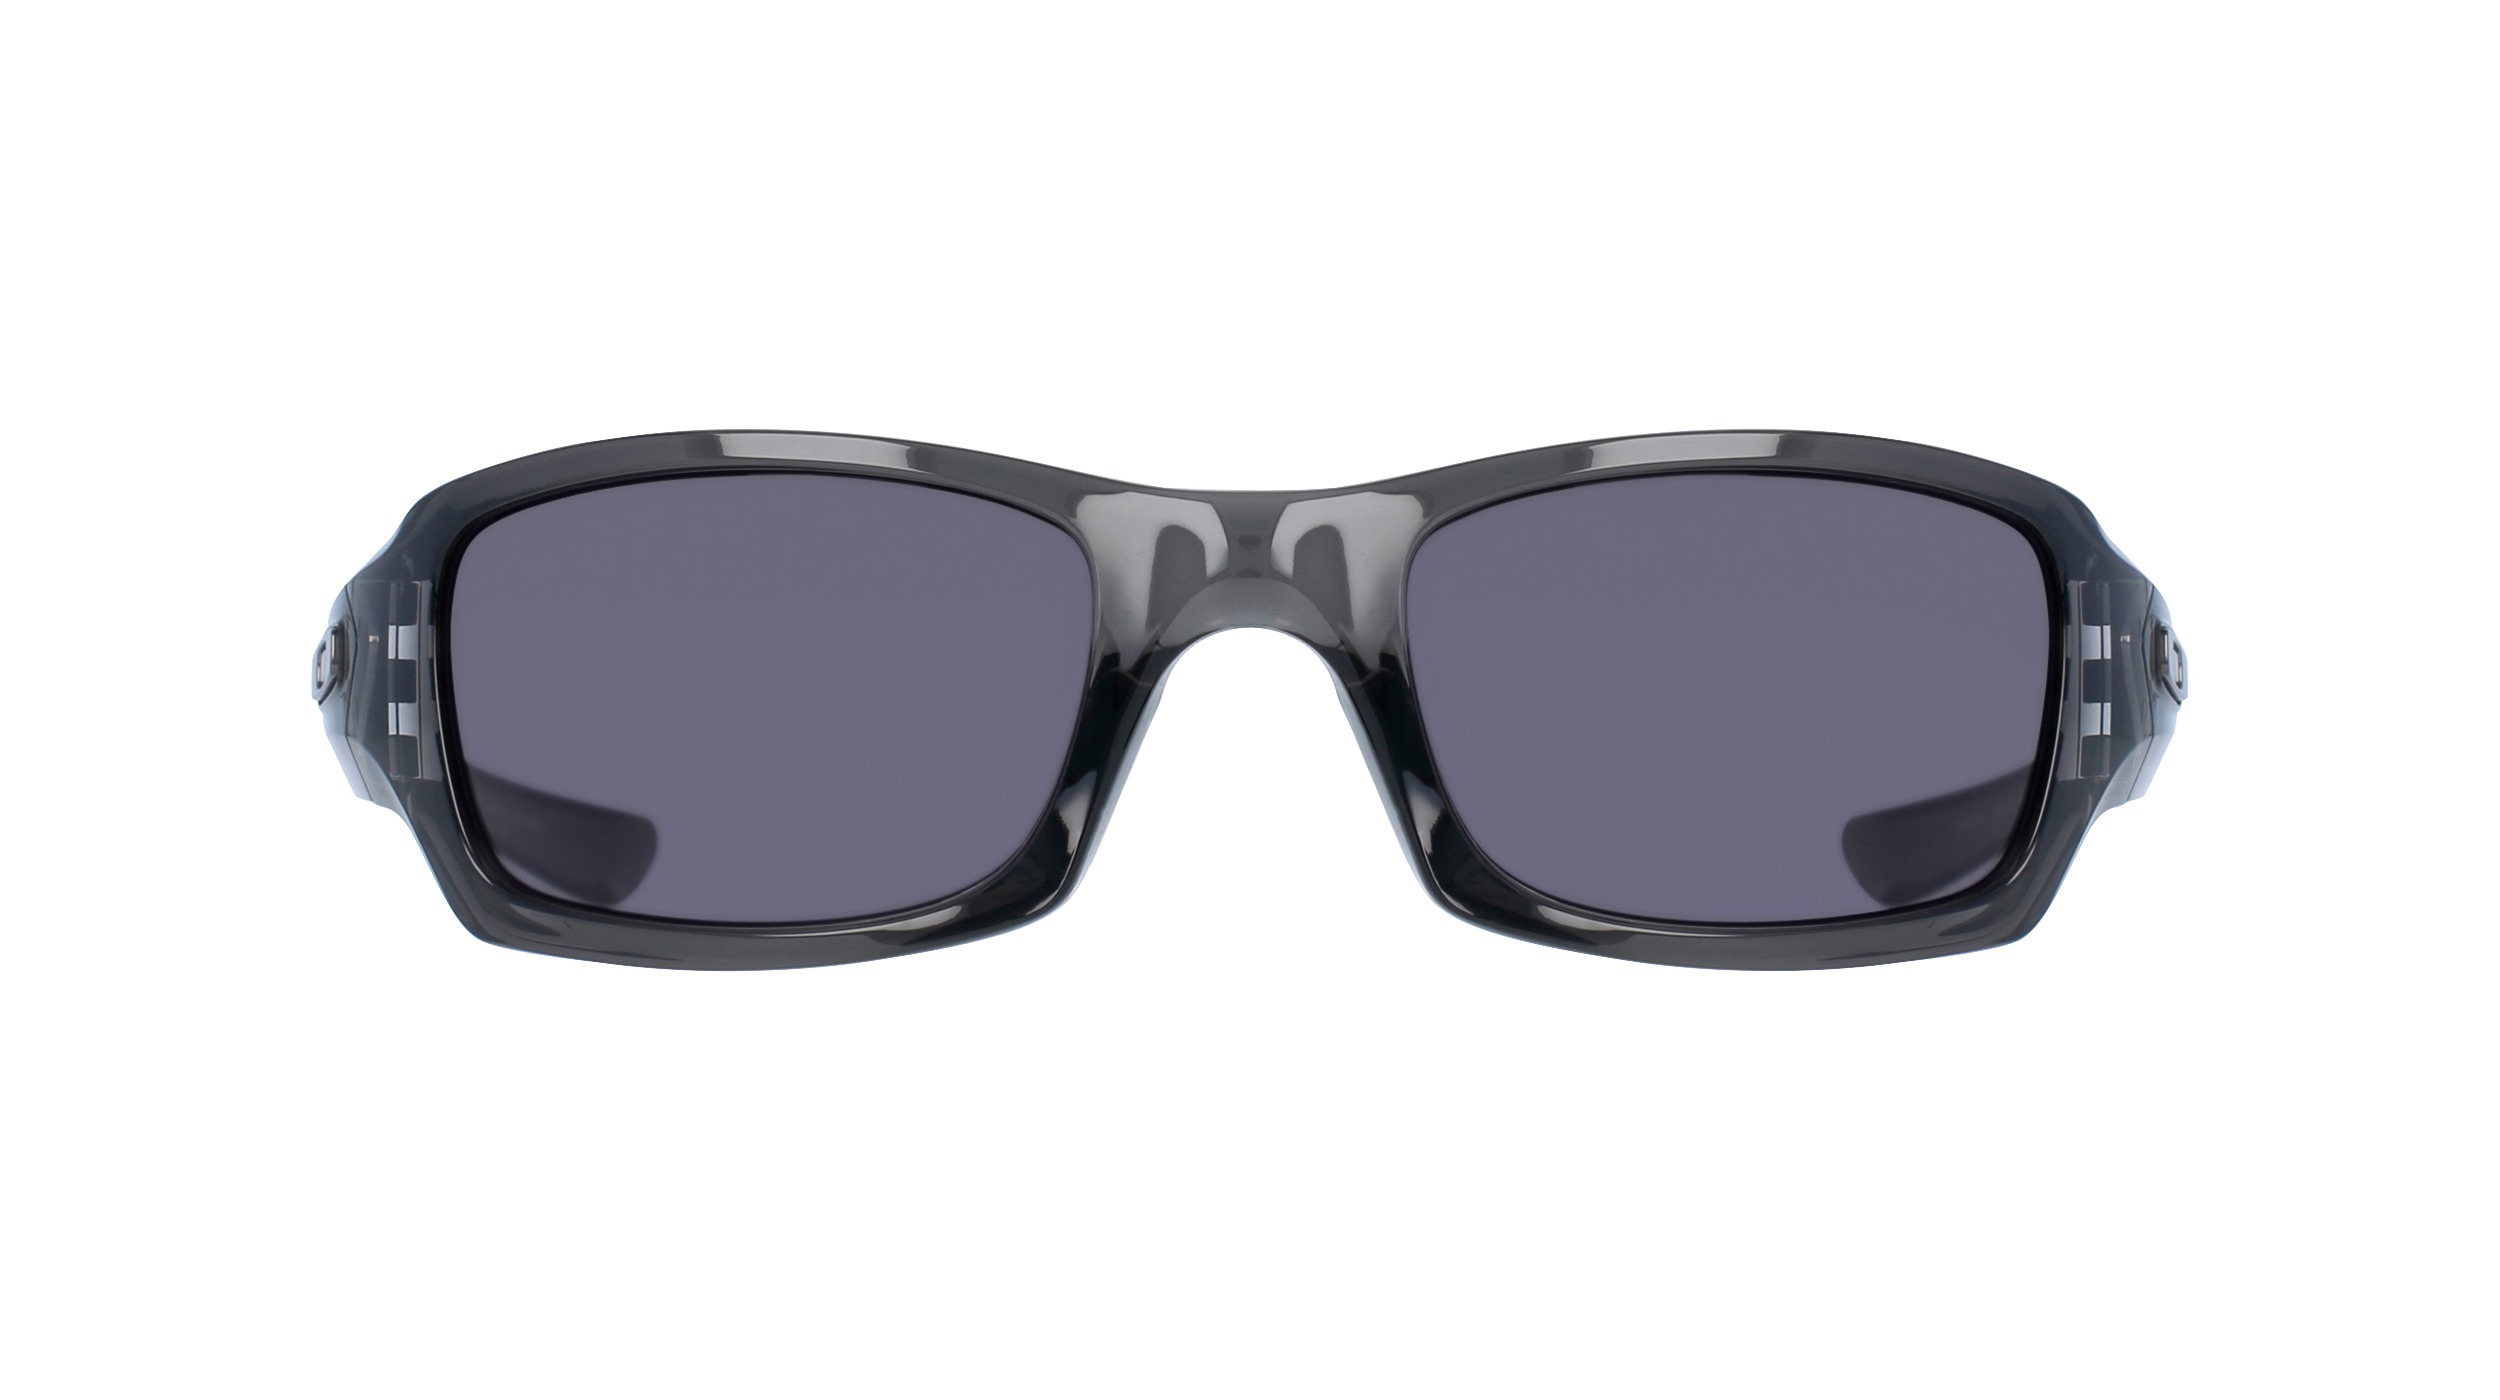 optic2000-lunettes-soleil-oakley